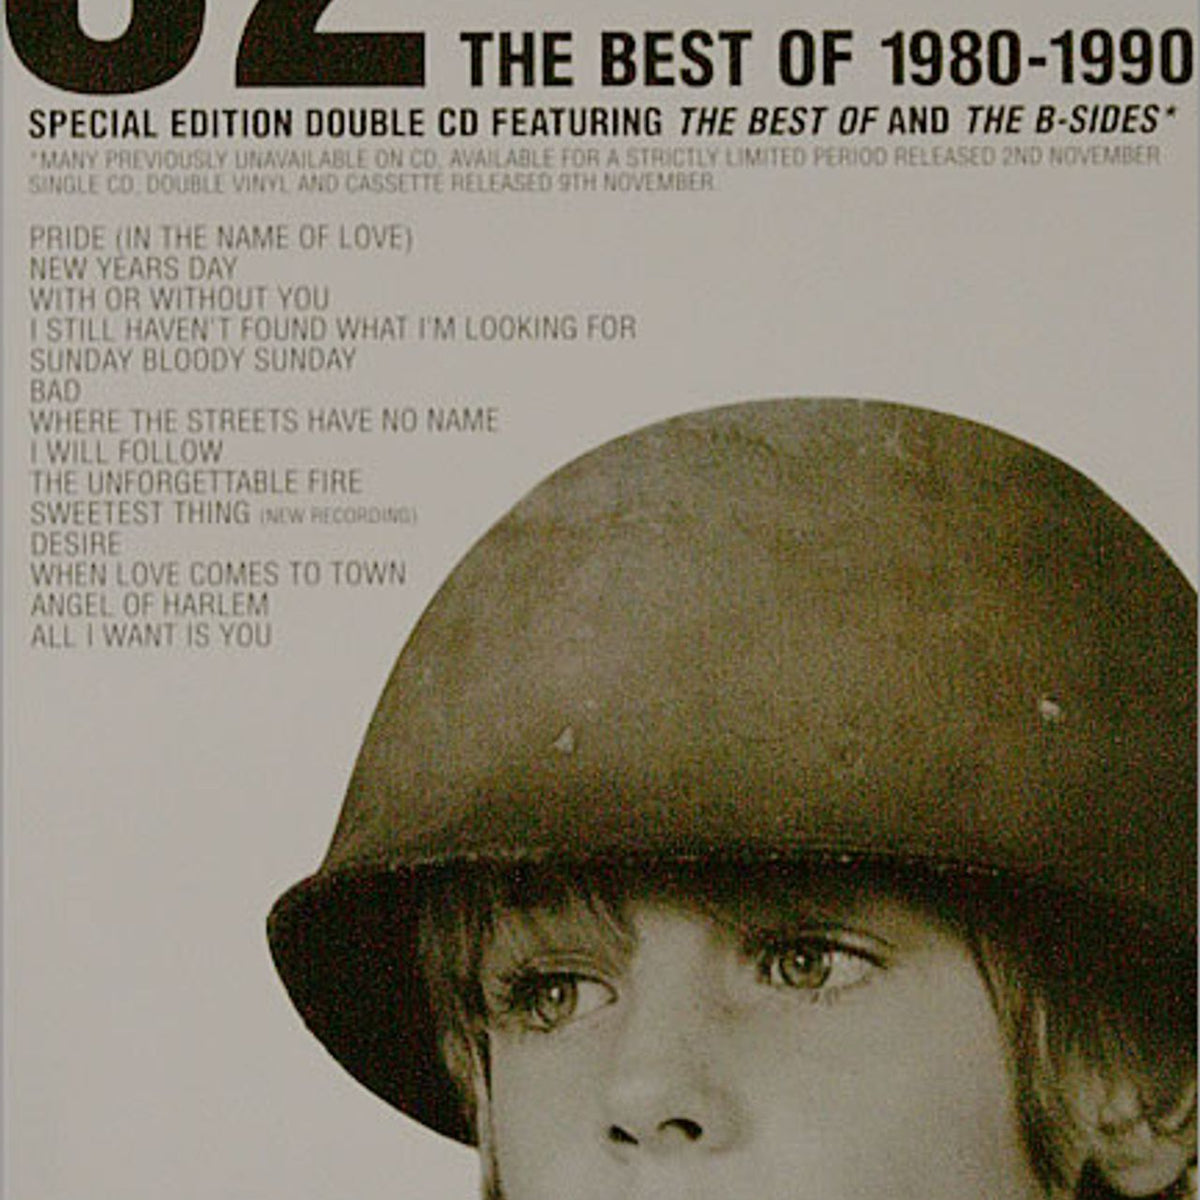 u2 the best of 1980 1990